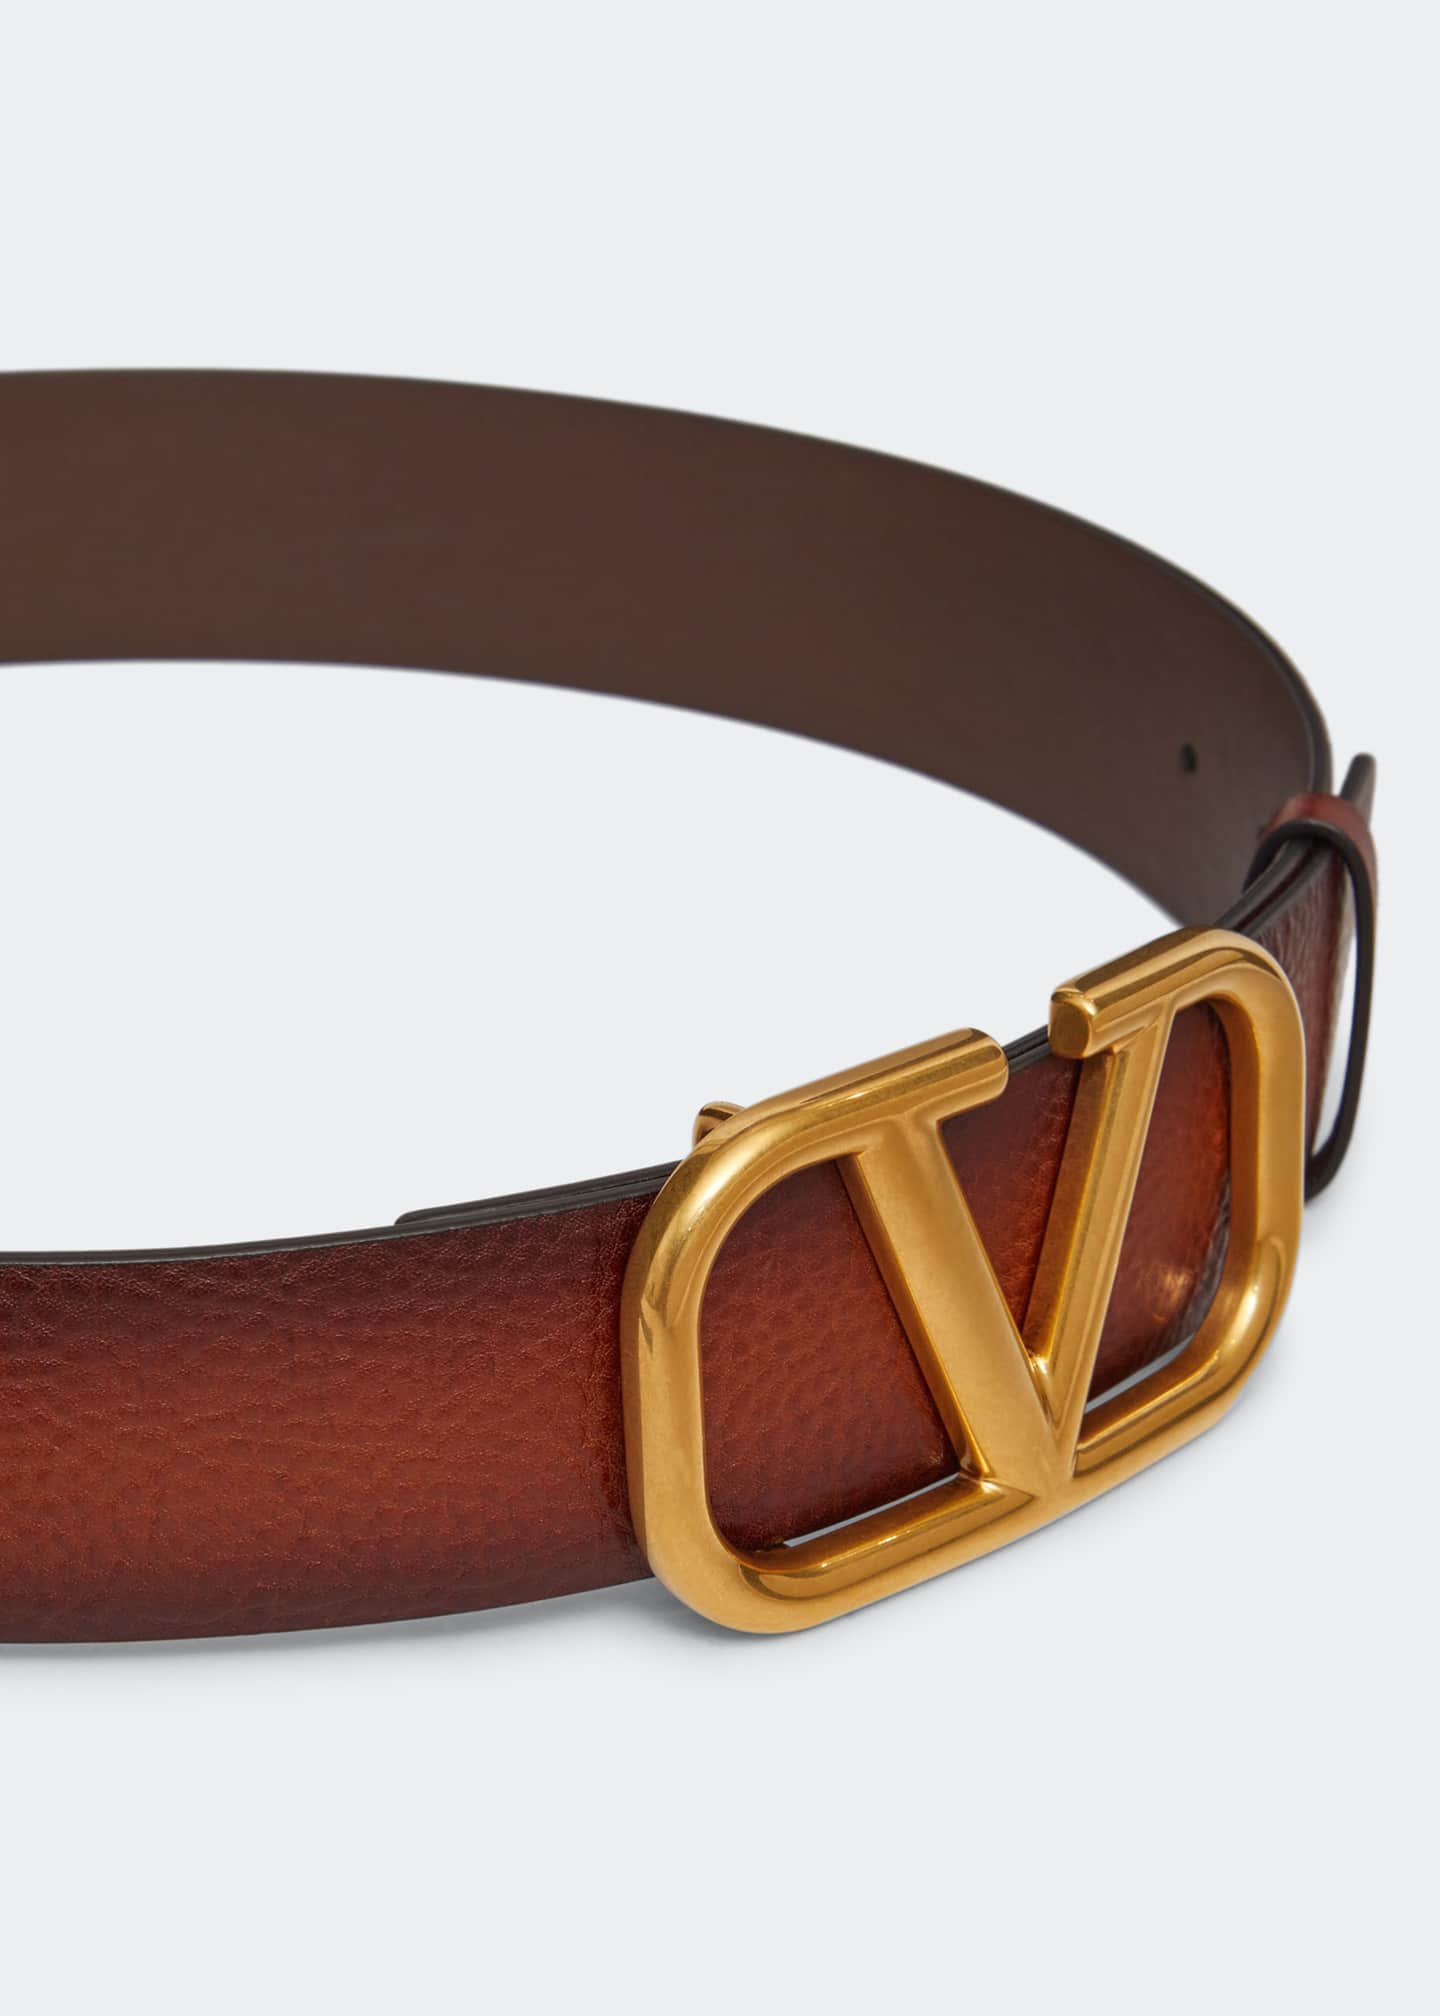 Valentino Garavani VLogo Reversible Leather Belt - Bergdorf Goodman